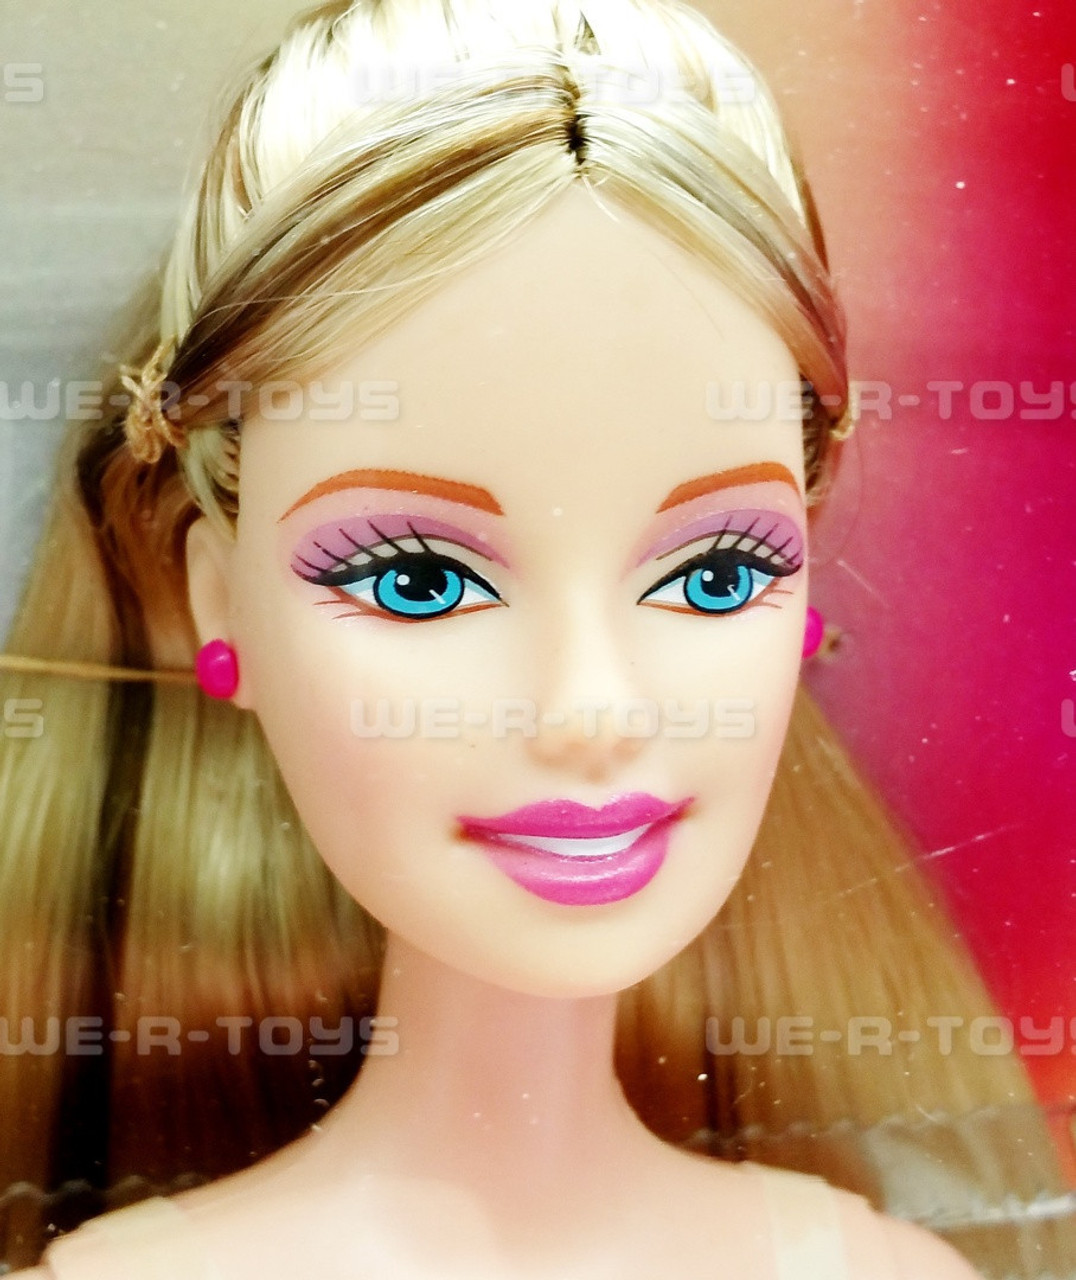 Barbie Fabulous Night Doll - PINK 2005 Mattel H8572 - We-R-Toys